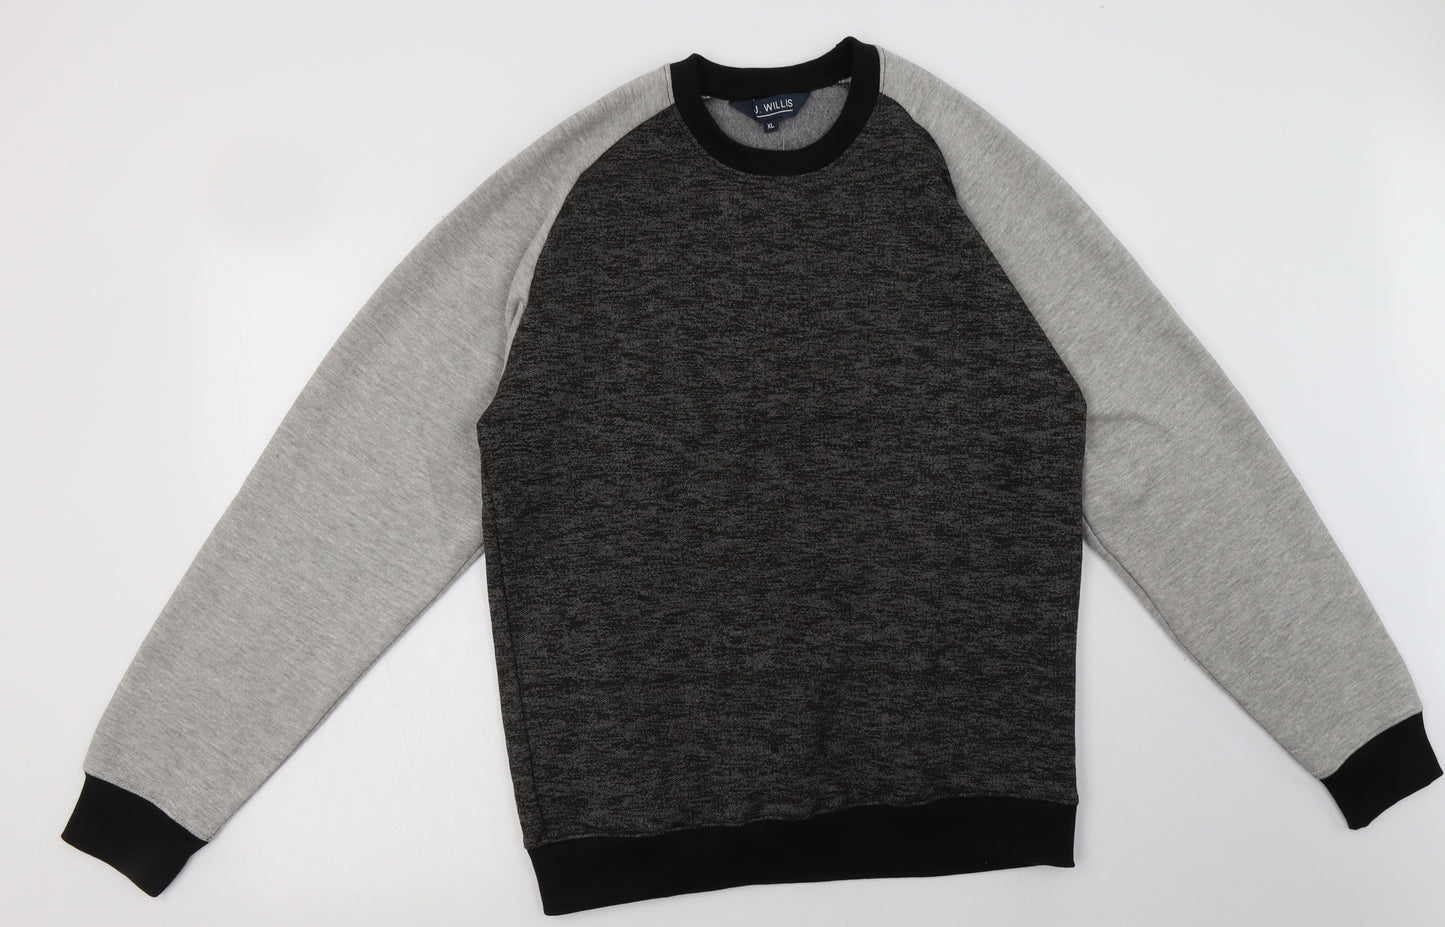 J.J.Willis Mens Black  Cotton Pullover Sweatshirt Size XL